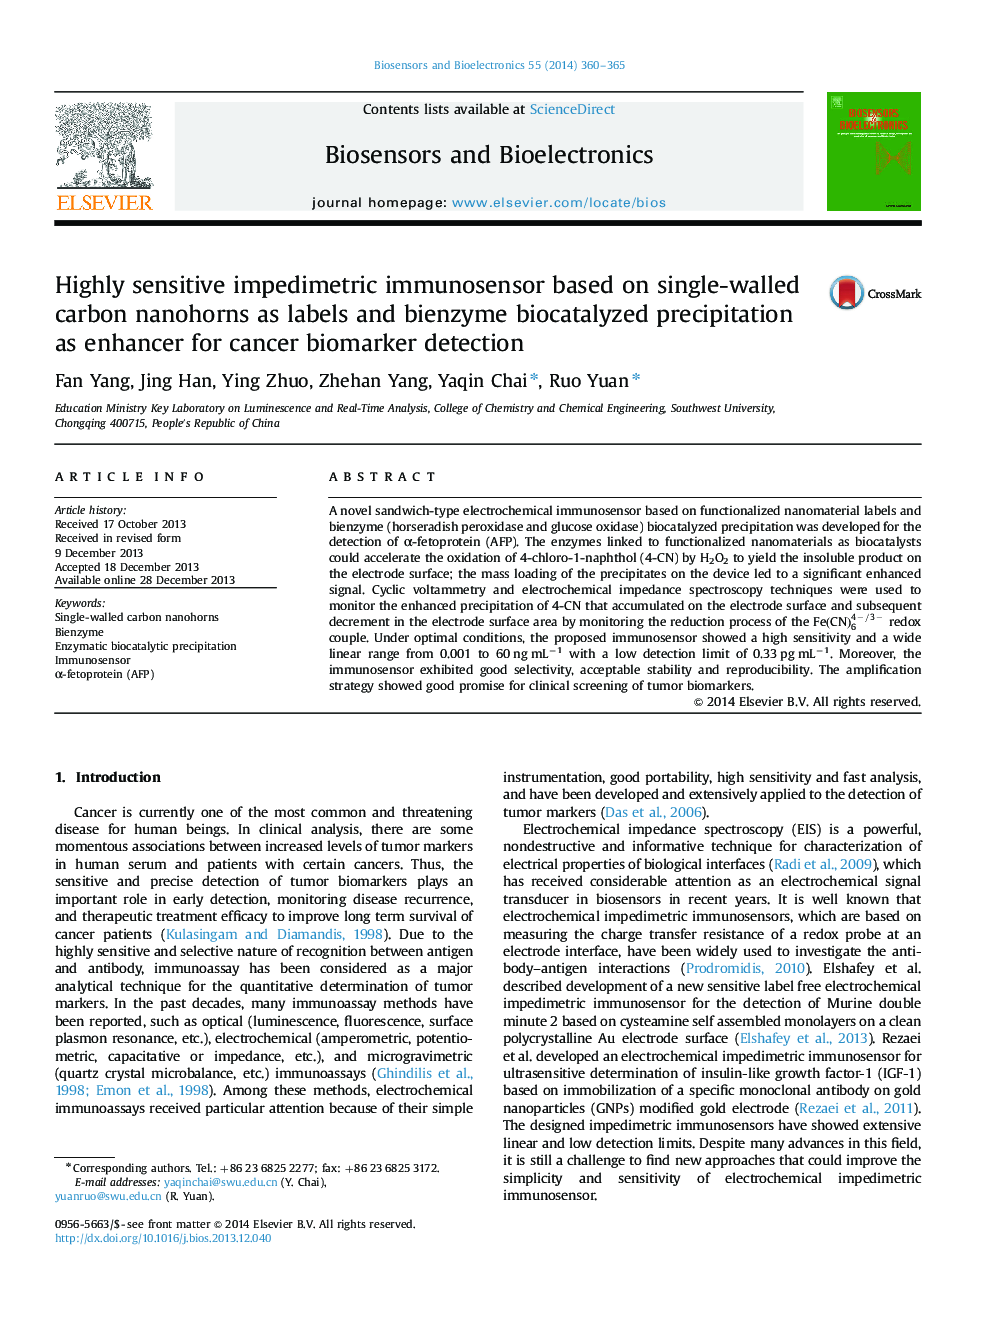 Highly sensitive impedimetric immunosensor based on single-walled carbon nanohorns as labels and bienzyme biocatalyzed precipitation as enhancer for cancer biomarker detection